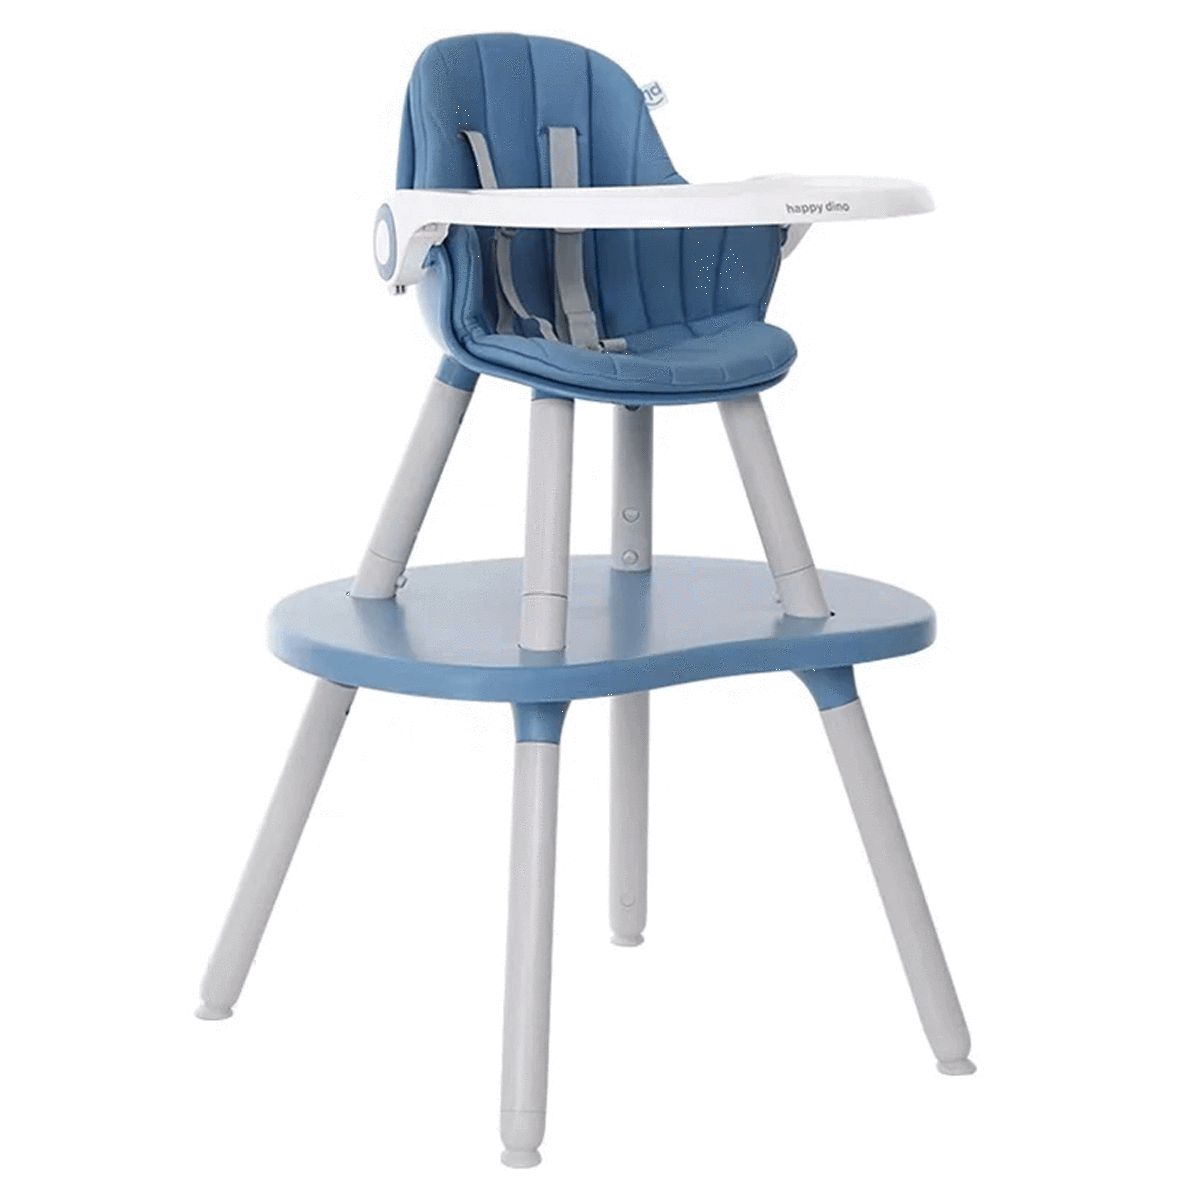 Kids Dual-Use Dining Chair Mushroom Shape Detachable High Quality Dining Table & Multi-function Chair